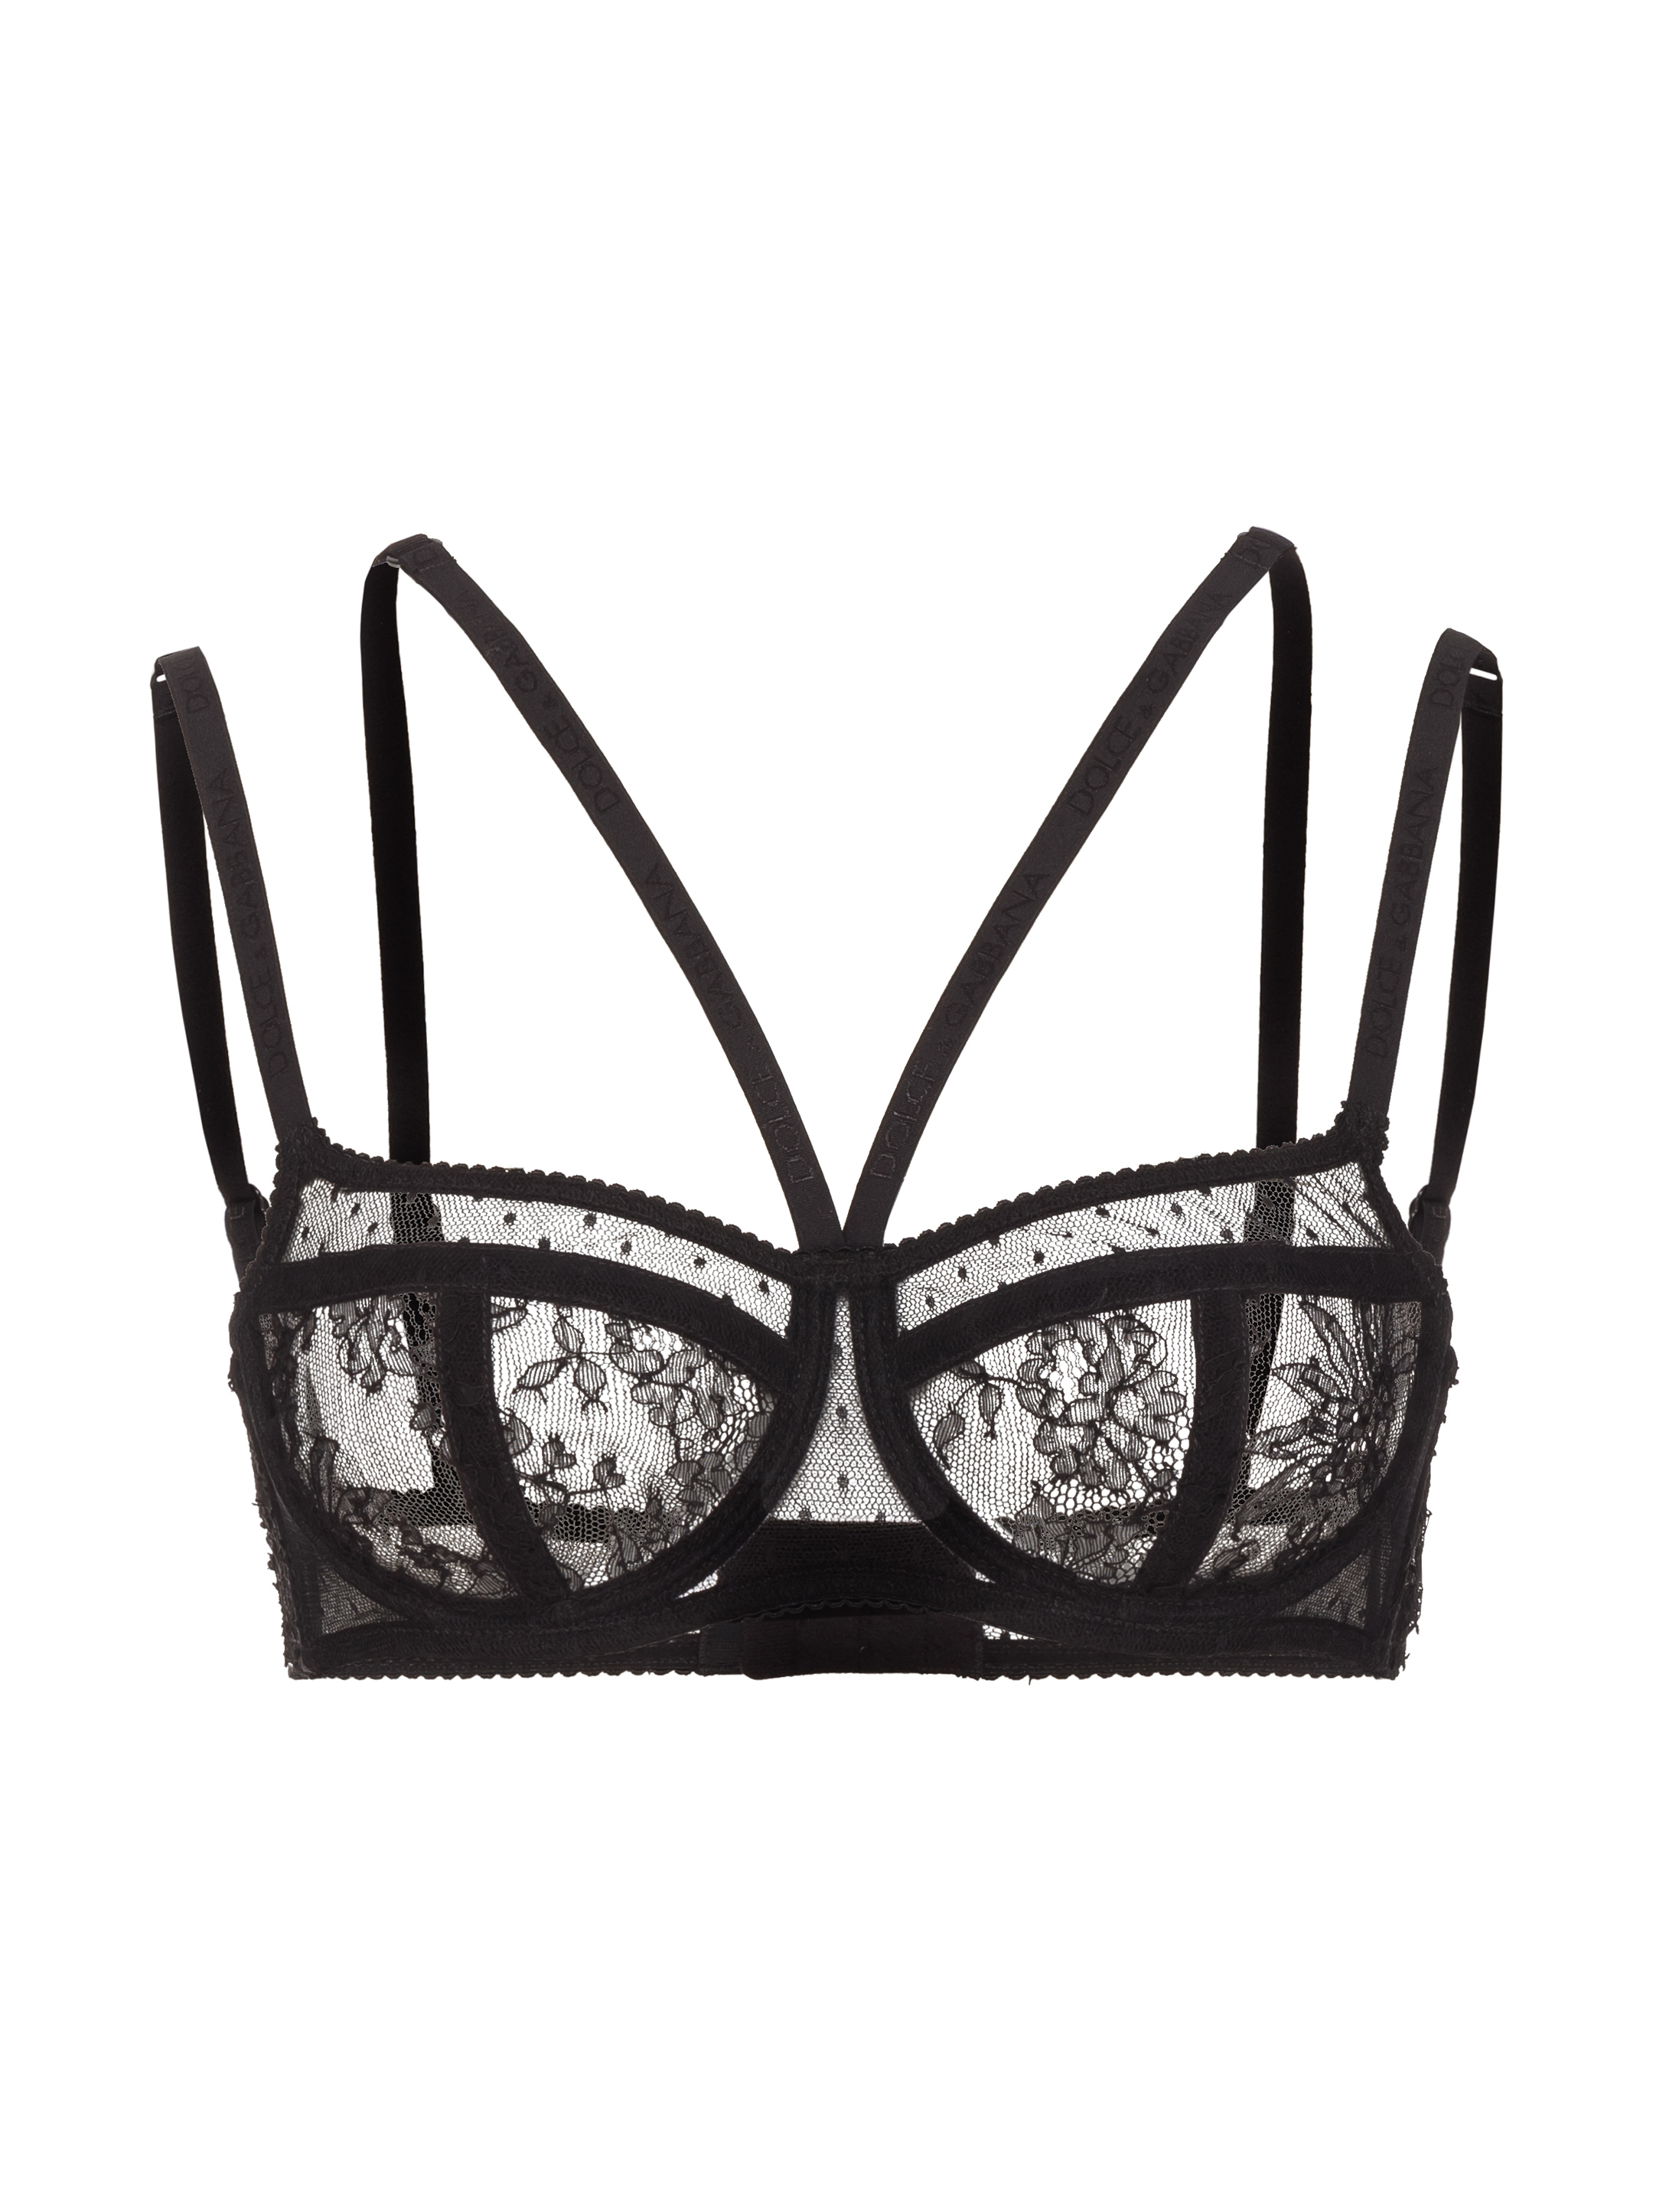 Dolce&Gabbana women's Lace bra - buy for 260000 KZT in the